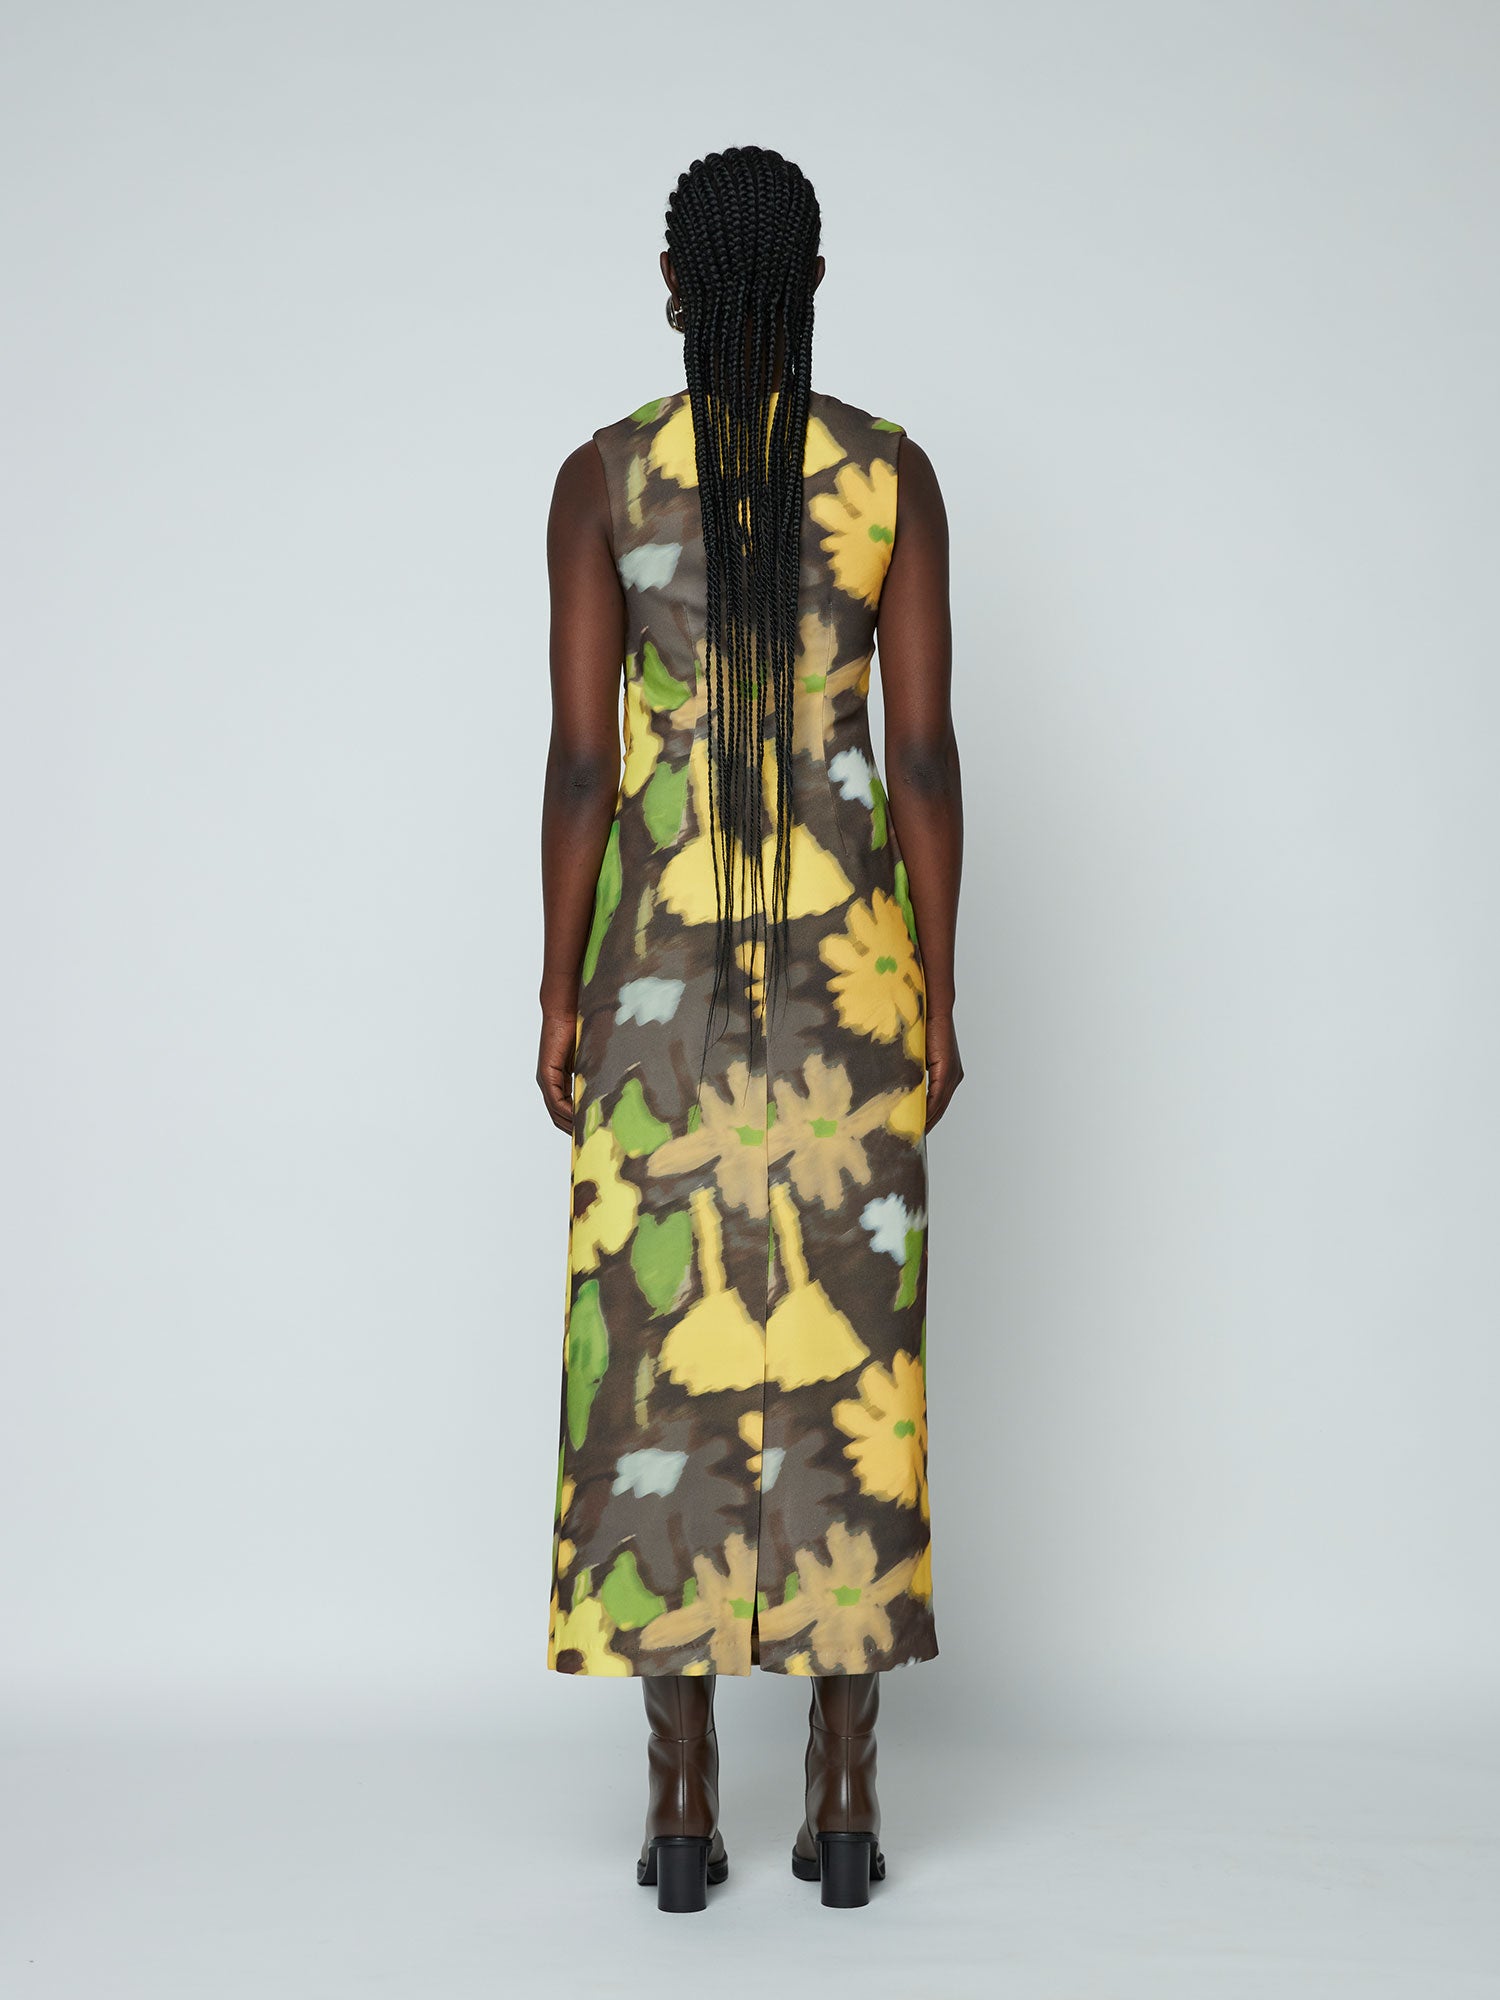 Wynn Hamlyn Ella Maxi Dress in Acid Flowers available at The New Trend Australia.